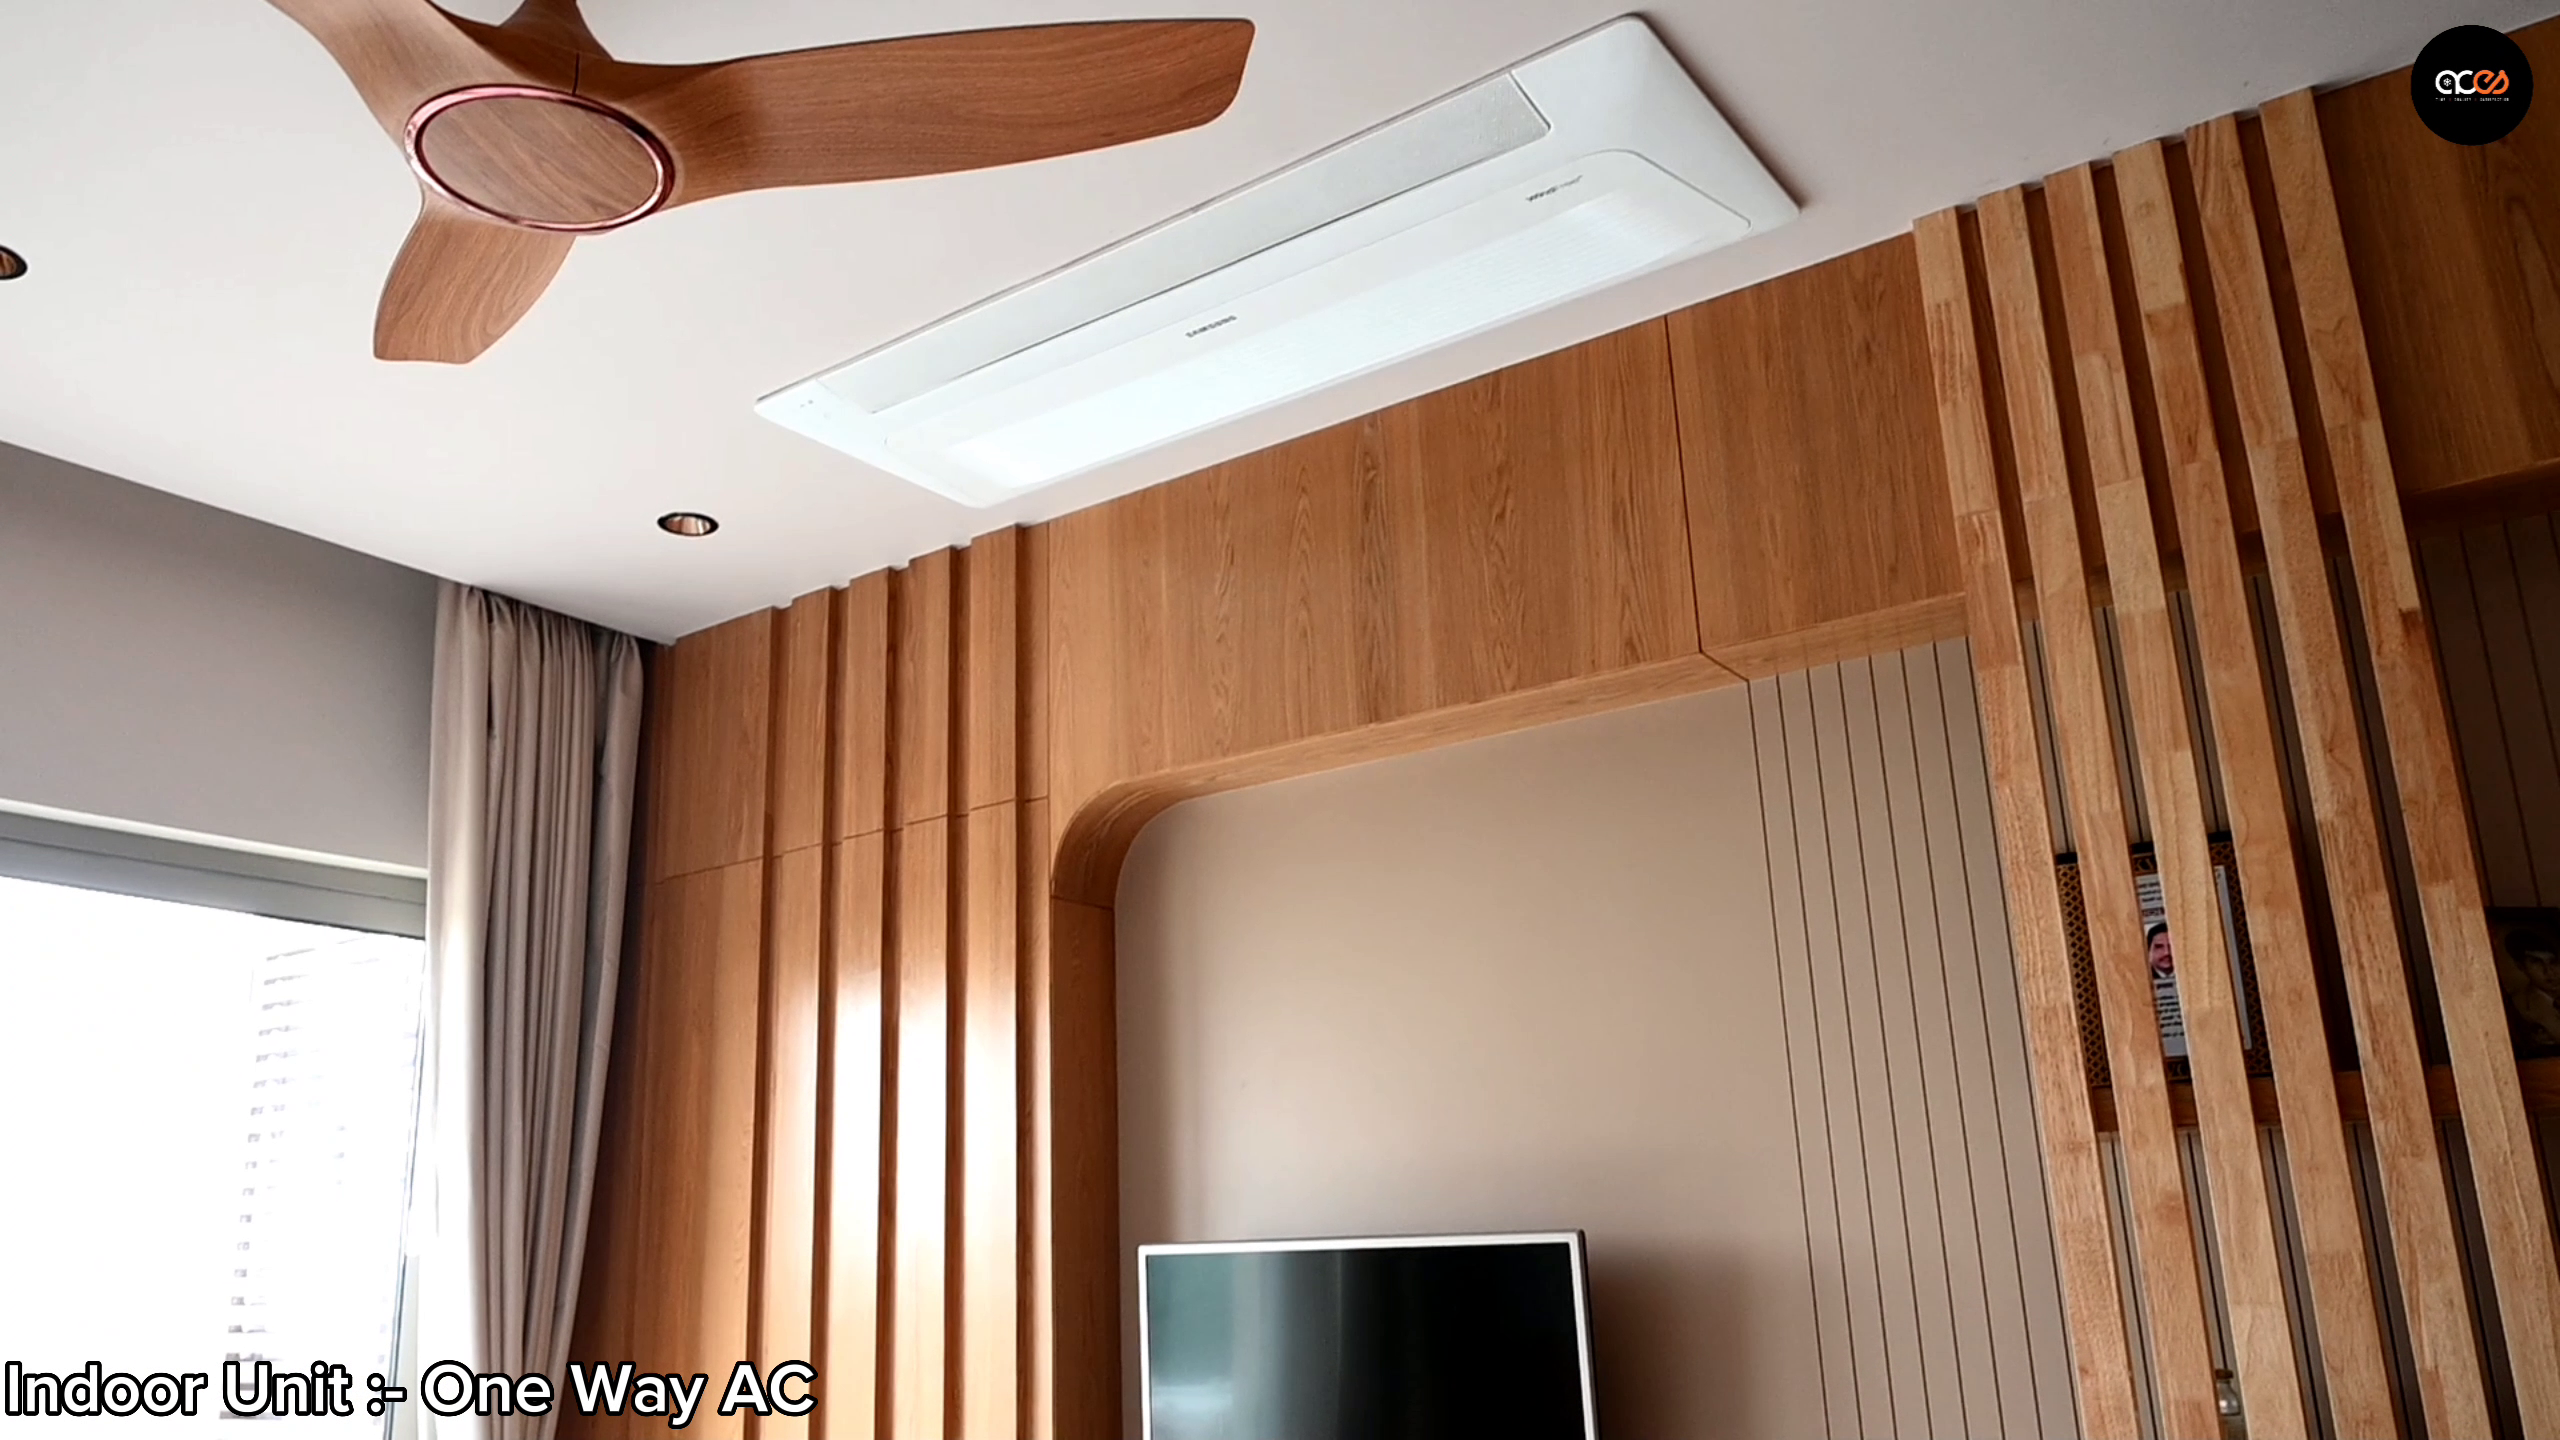 Samsung WindFree 1Way ac in bedroom